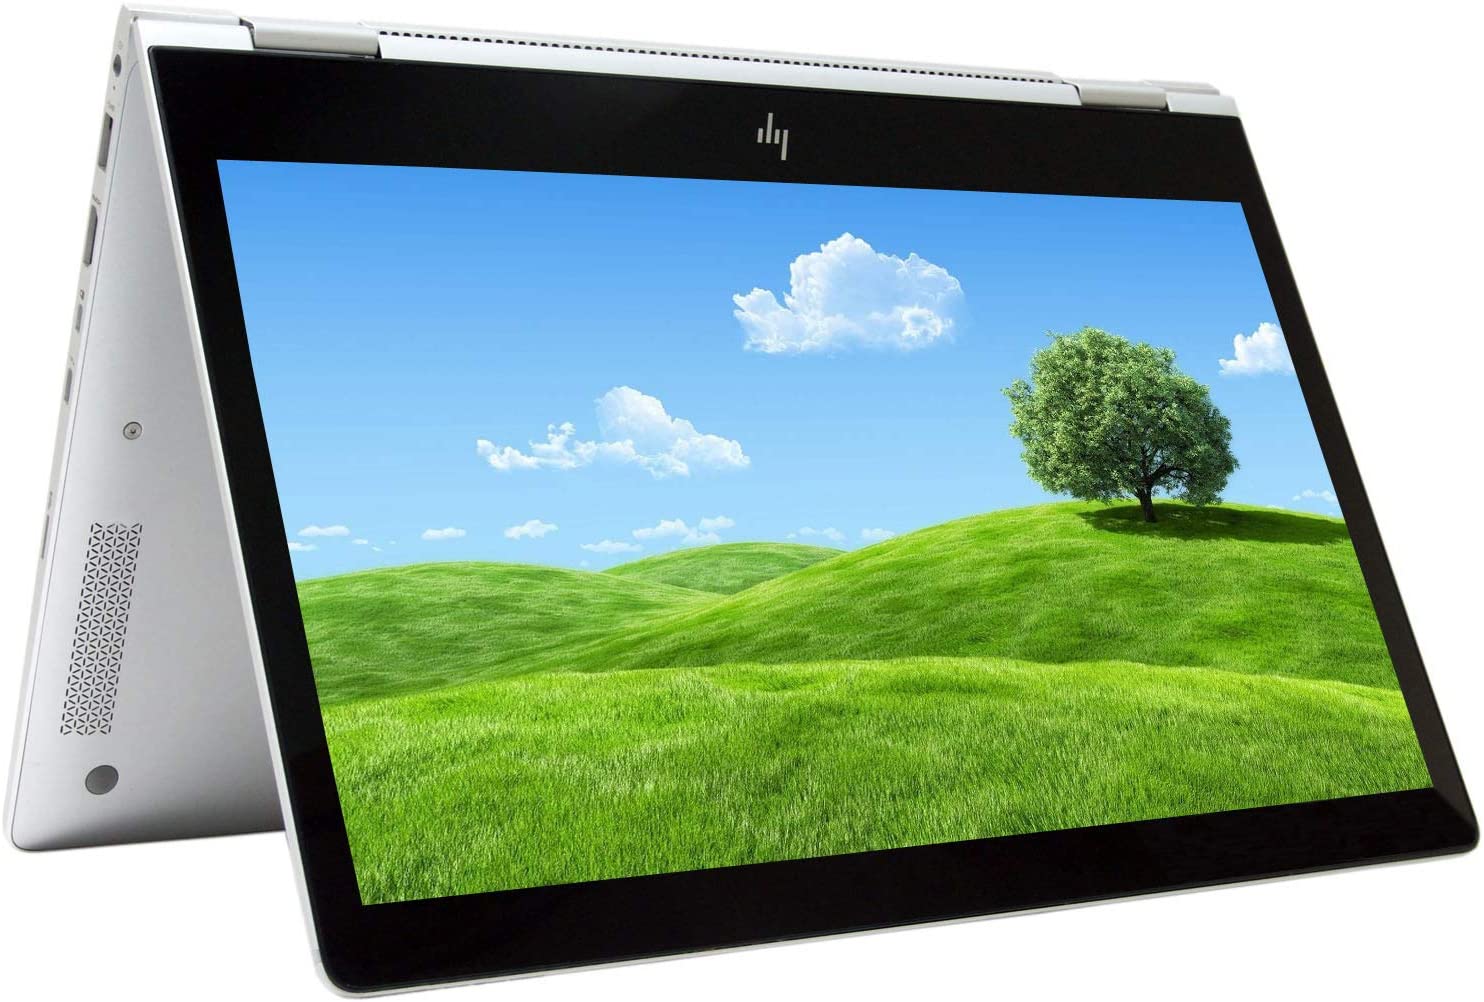 Ordinateur portable reconditionné HP EliteBook X360 1030 G2 13,3"(Core i7-7600U 2,8 GHz/8 Go de RAM/512 Go de SSD/Windows 10)